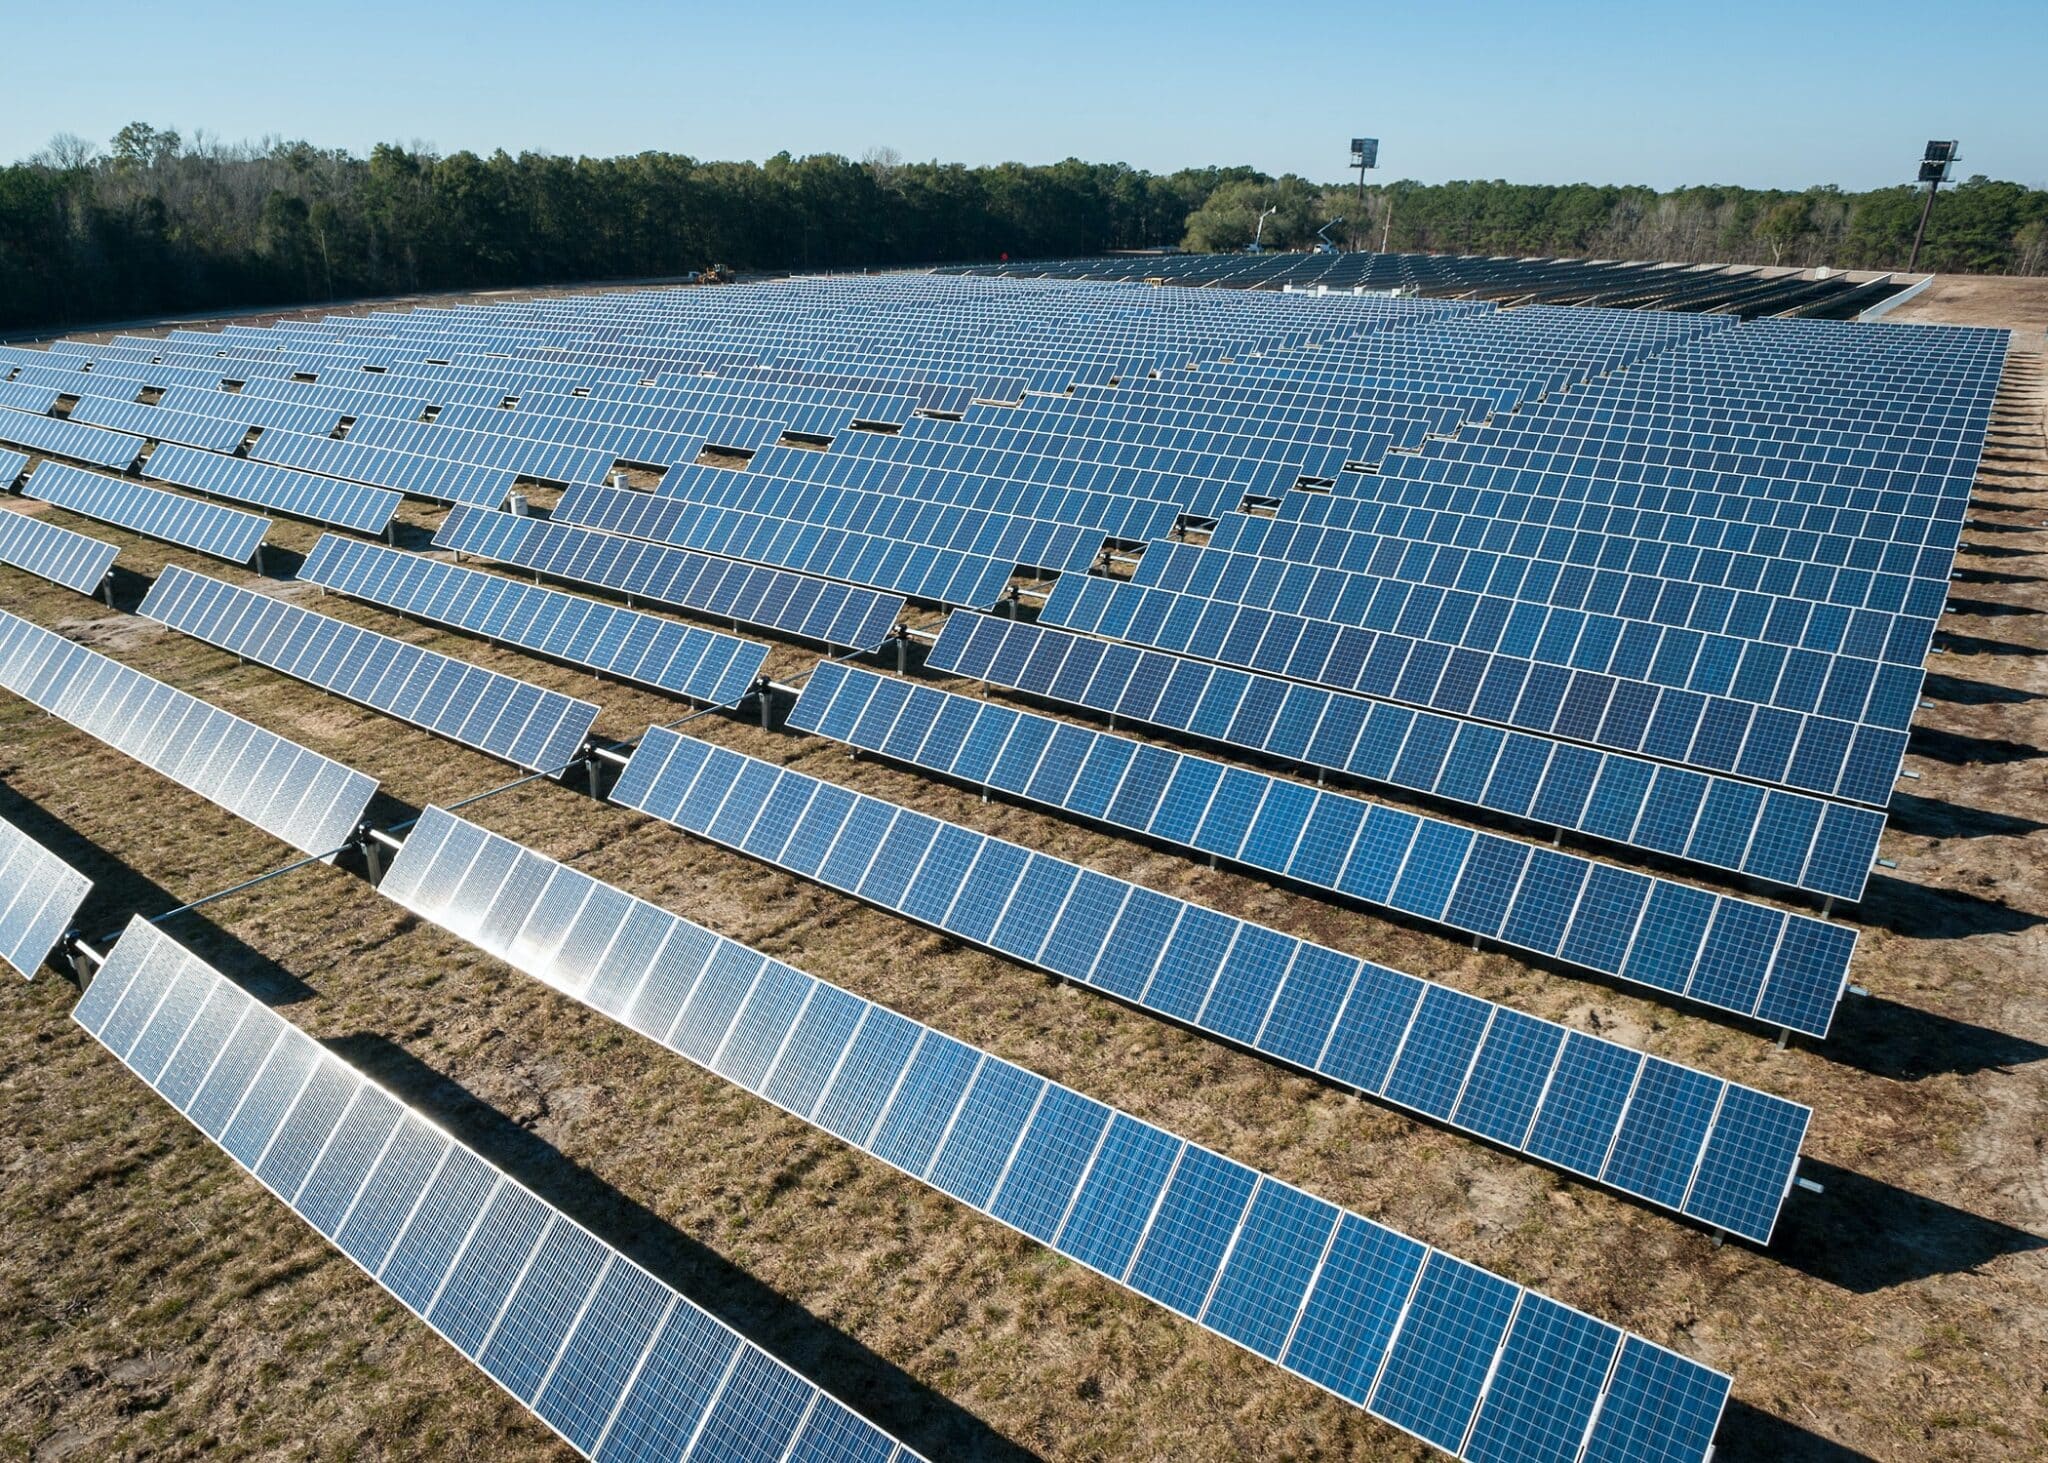 Large solar farm dedicated for community solar projects